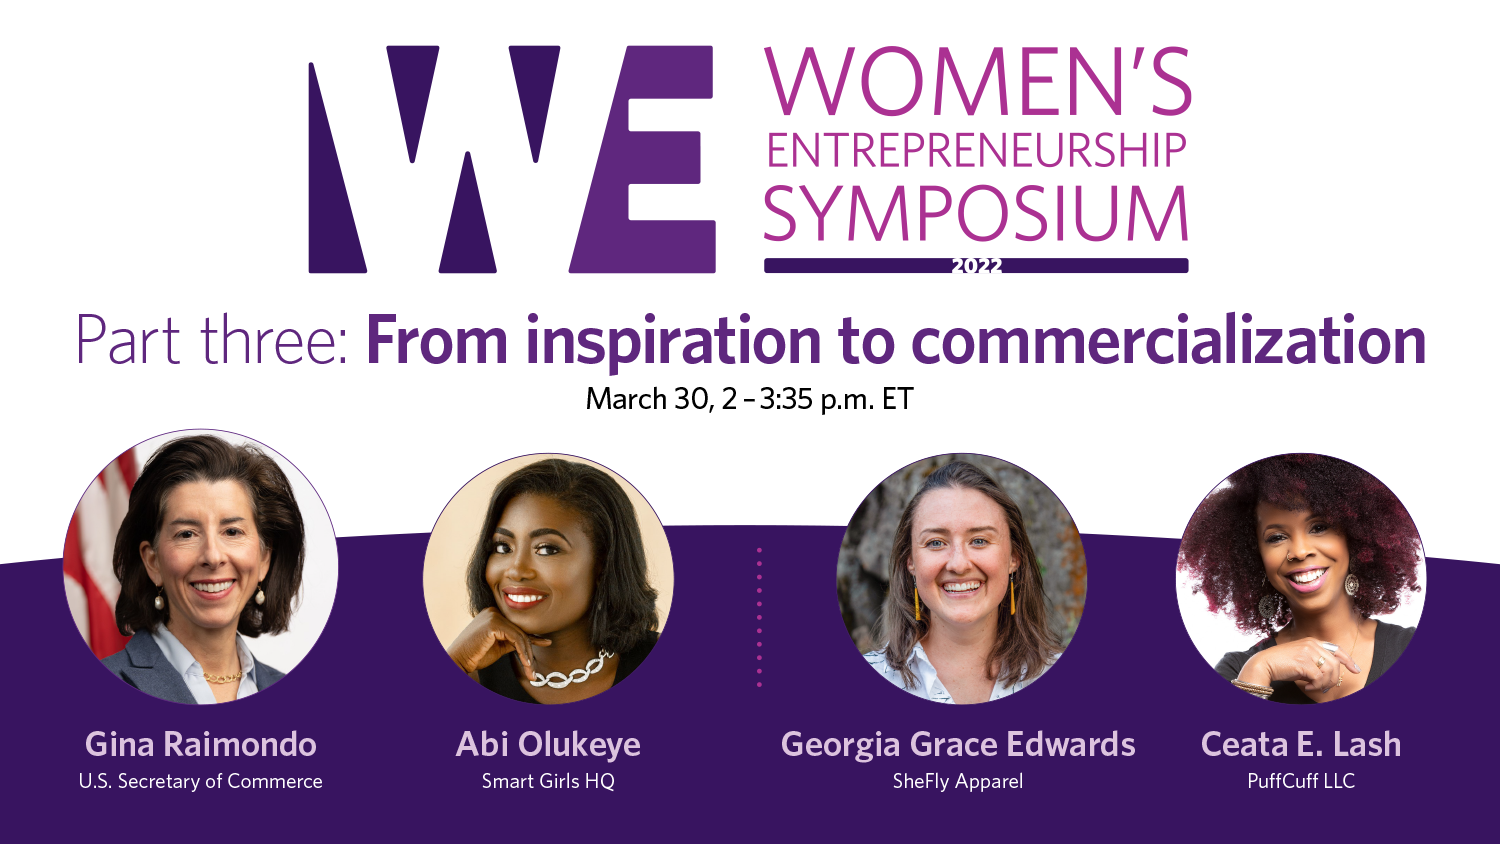 Women's entrepreneurship symposium -- March 30, 2-3:35 pm ET